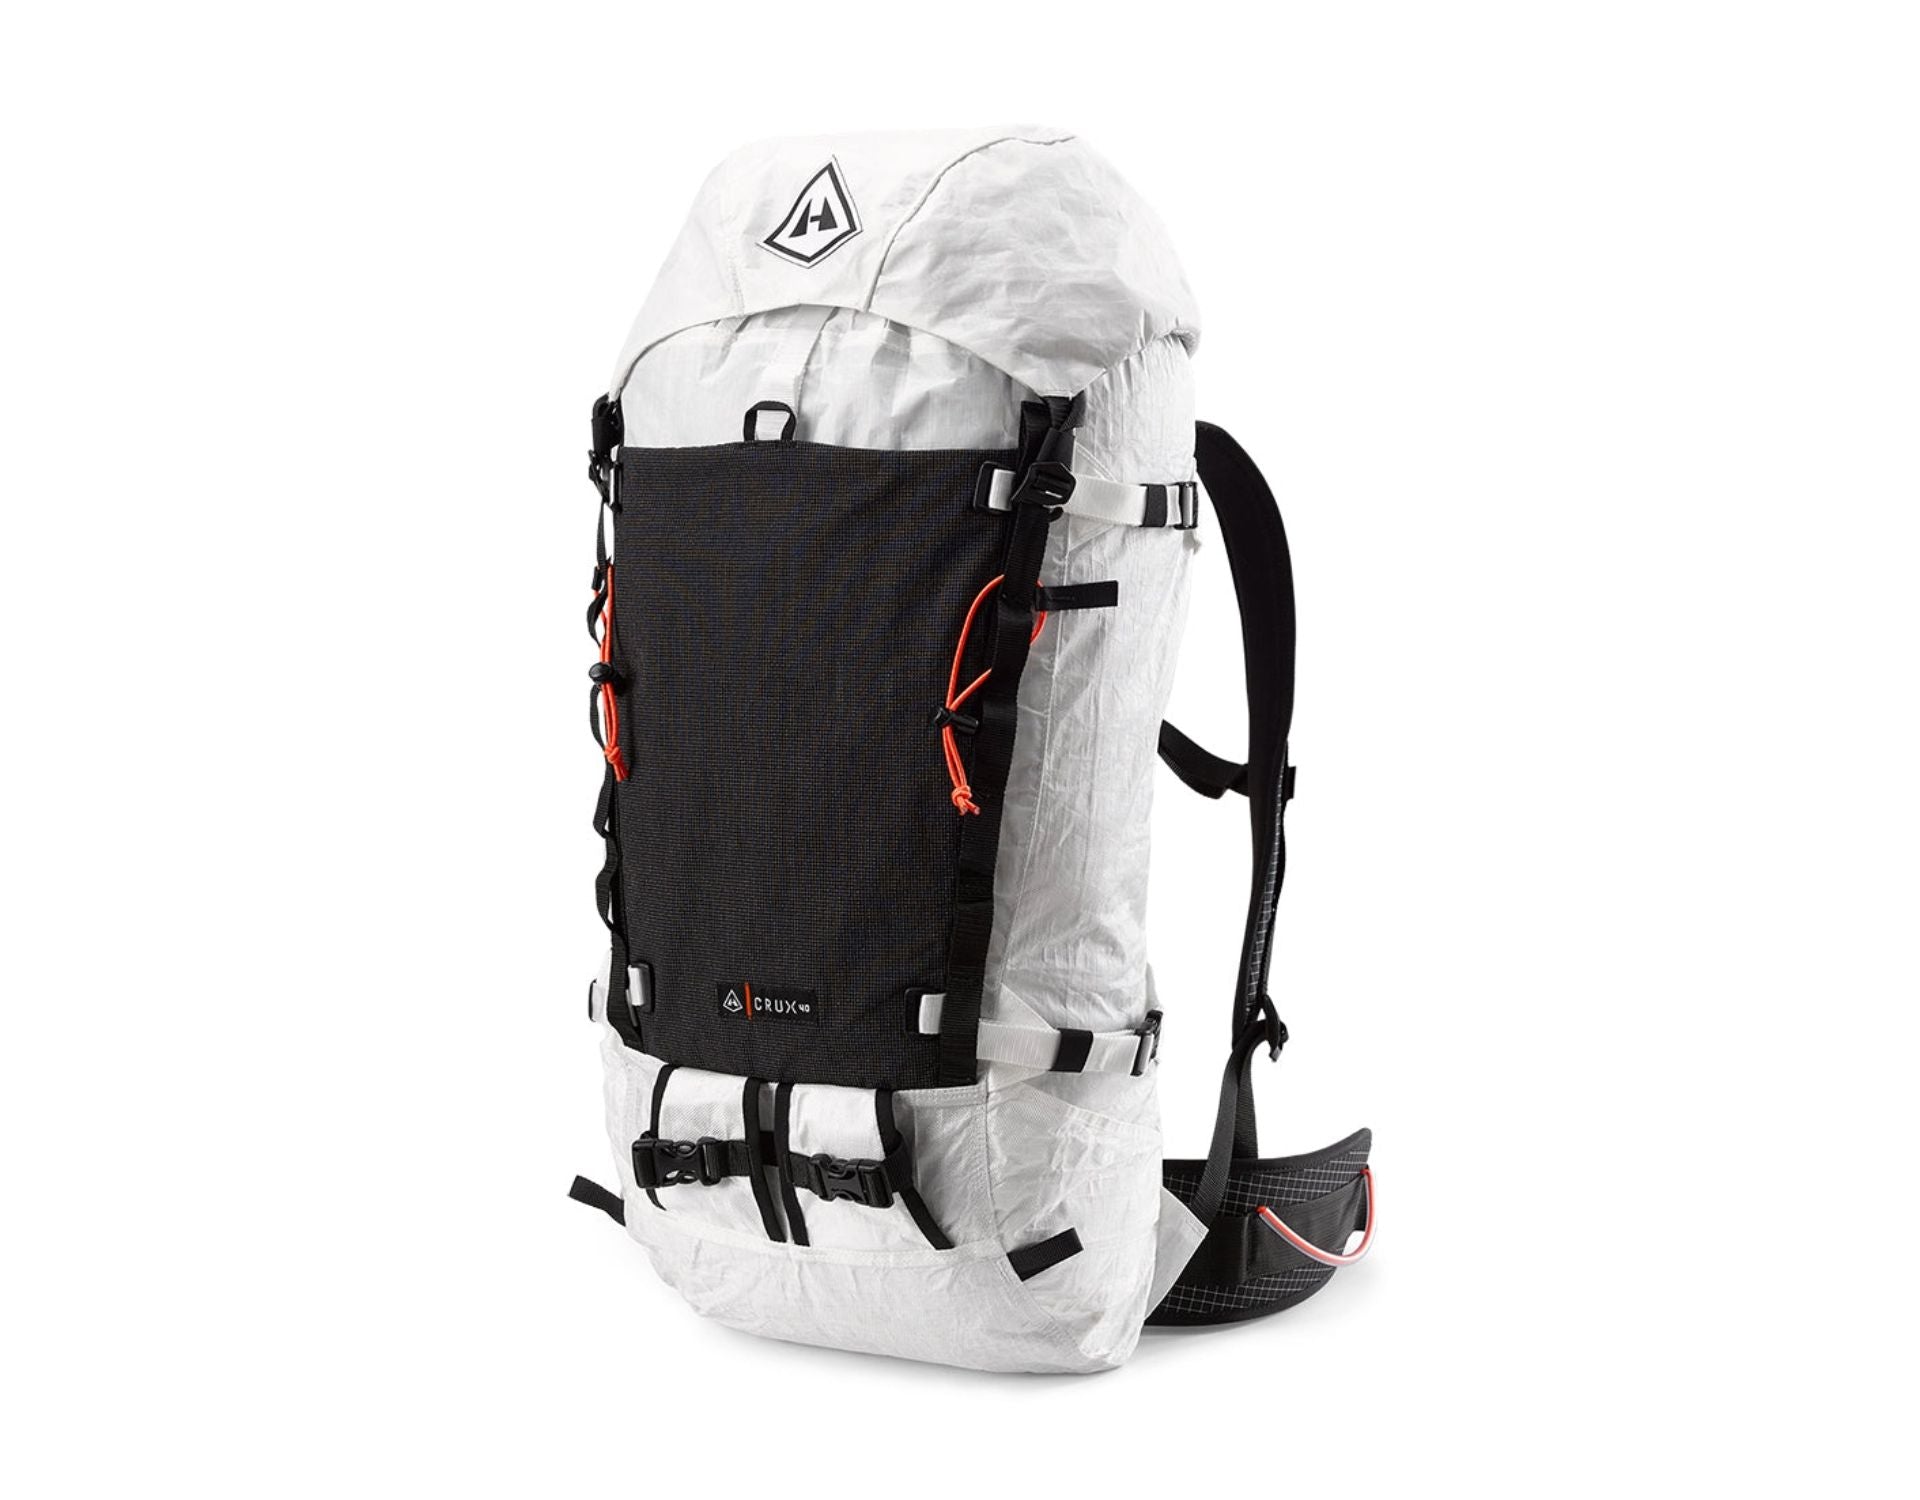 Hyperlite Mountain Gear Crux 40 Backpack in White